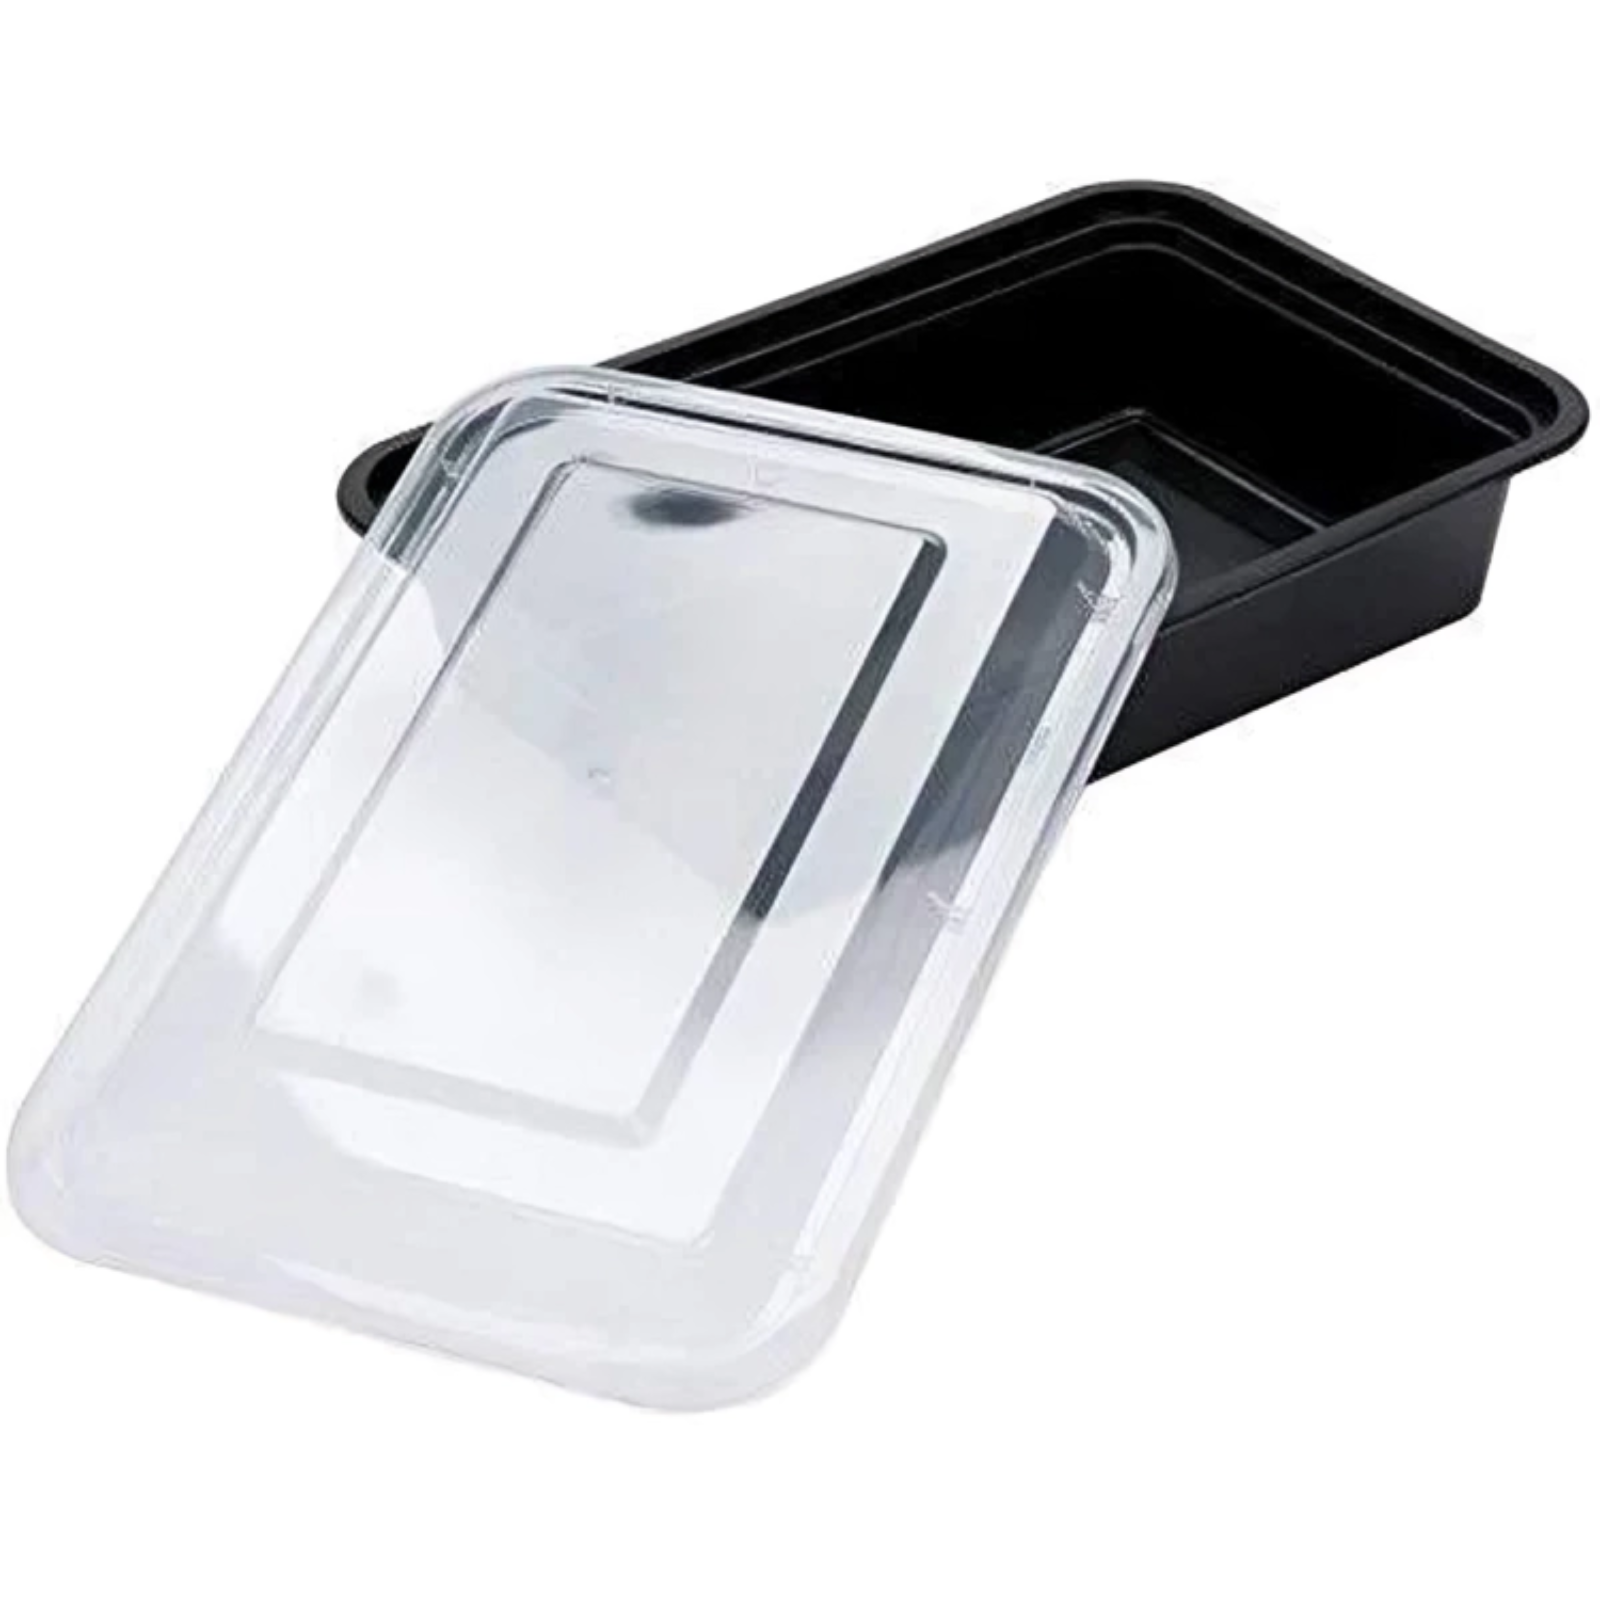 *BULK* 28oz. Black Rectangular Meal Prep / Bento Box Containers with Lids Food Storage & Serving VeZee   